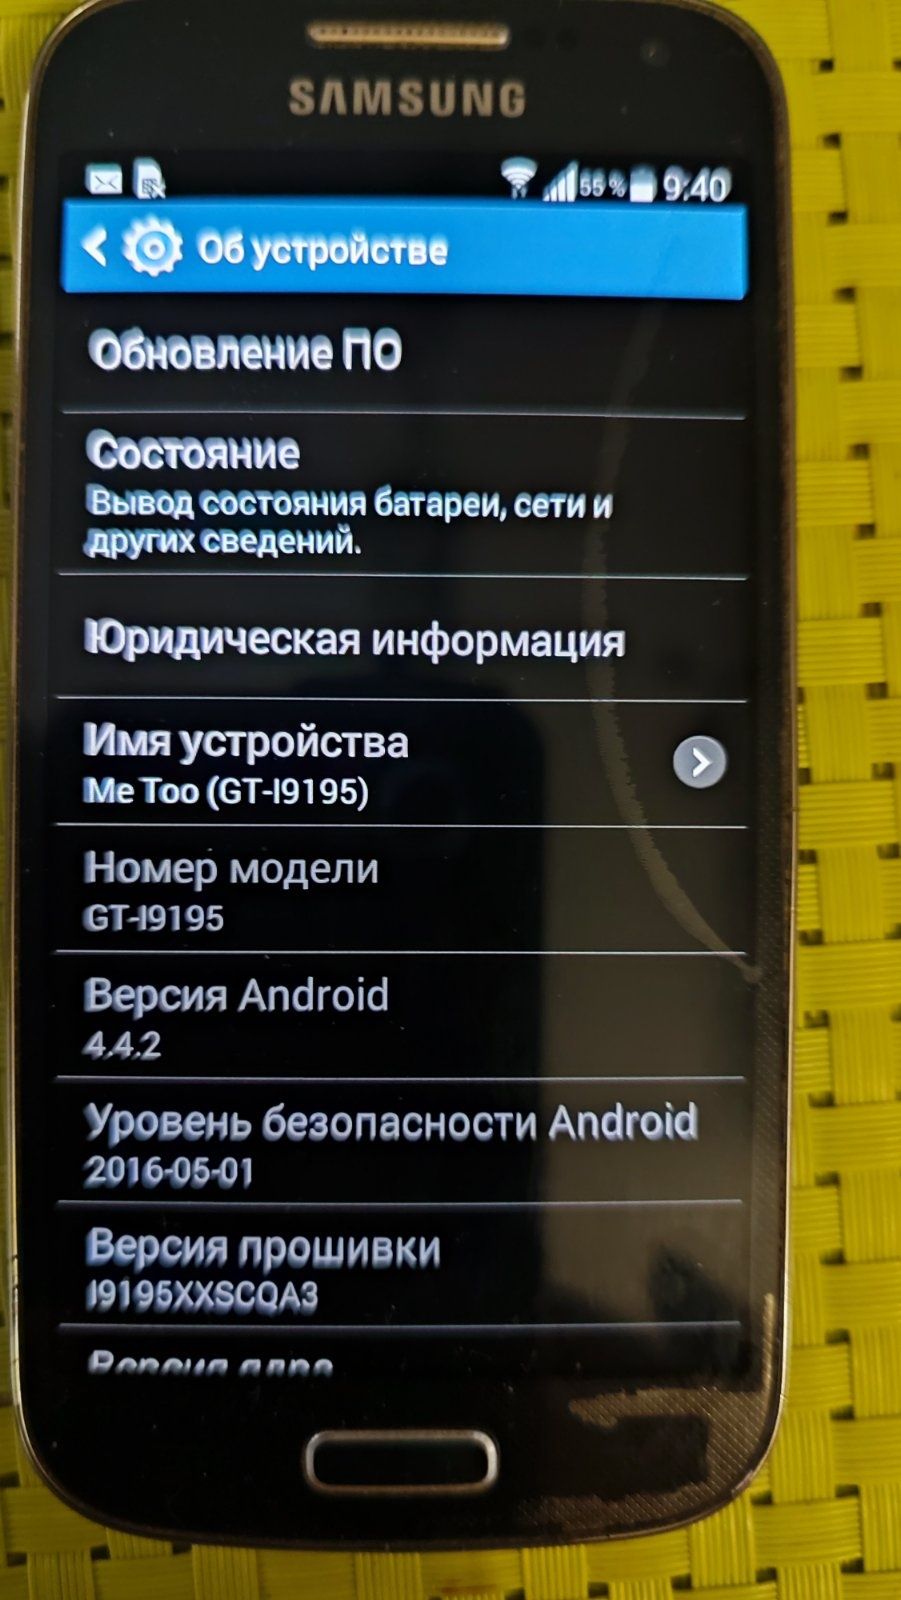 смартфон Samsung Galaxy S4mini GT-i9195